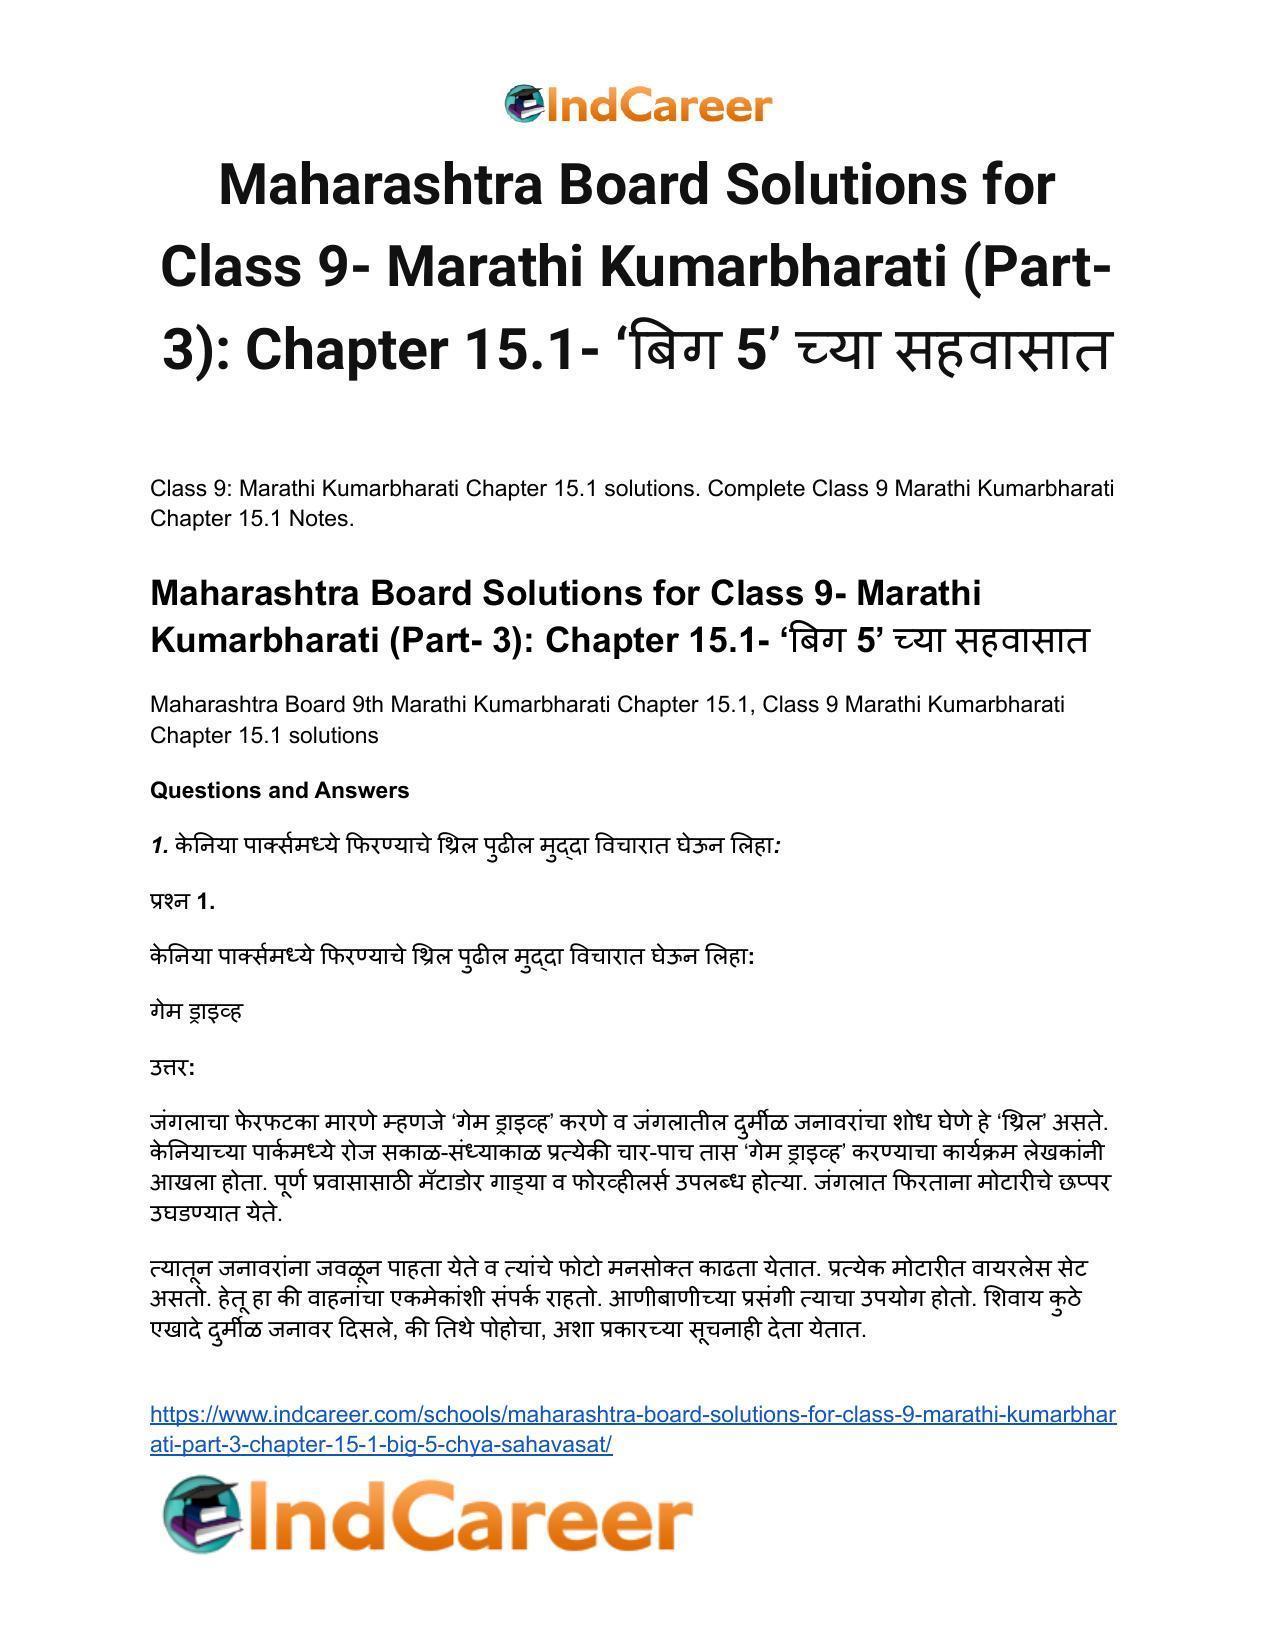 Maharashtra Board Solutions for Class 9- Marathi Kumarbharati (Part- 3): Chapter 15.1- ‘बिग 5’ च्या सहवासात - Page 2